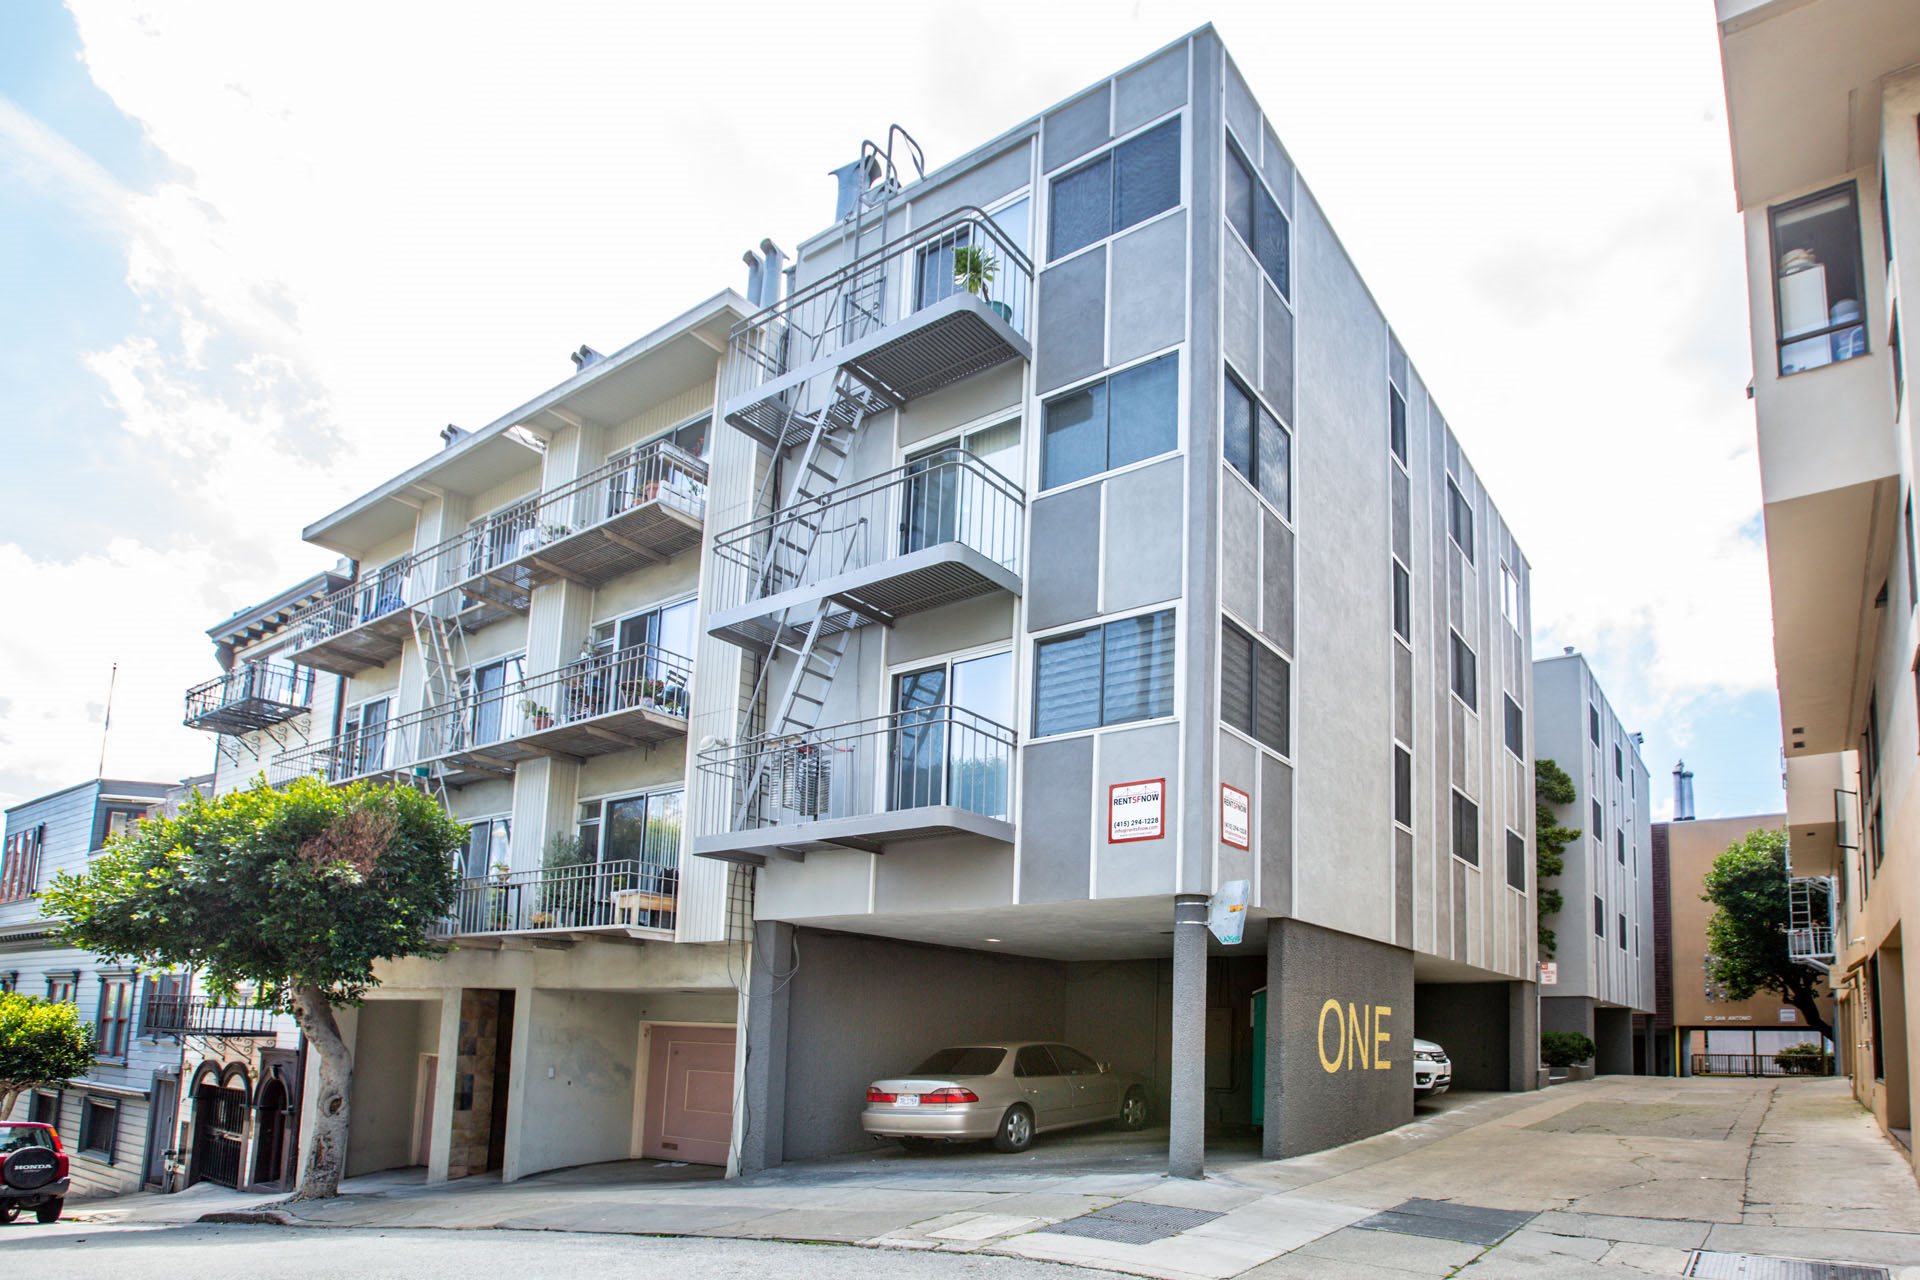  Apartment Rent Ordinance San Jose With Luxury Interior